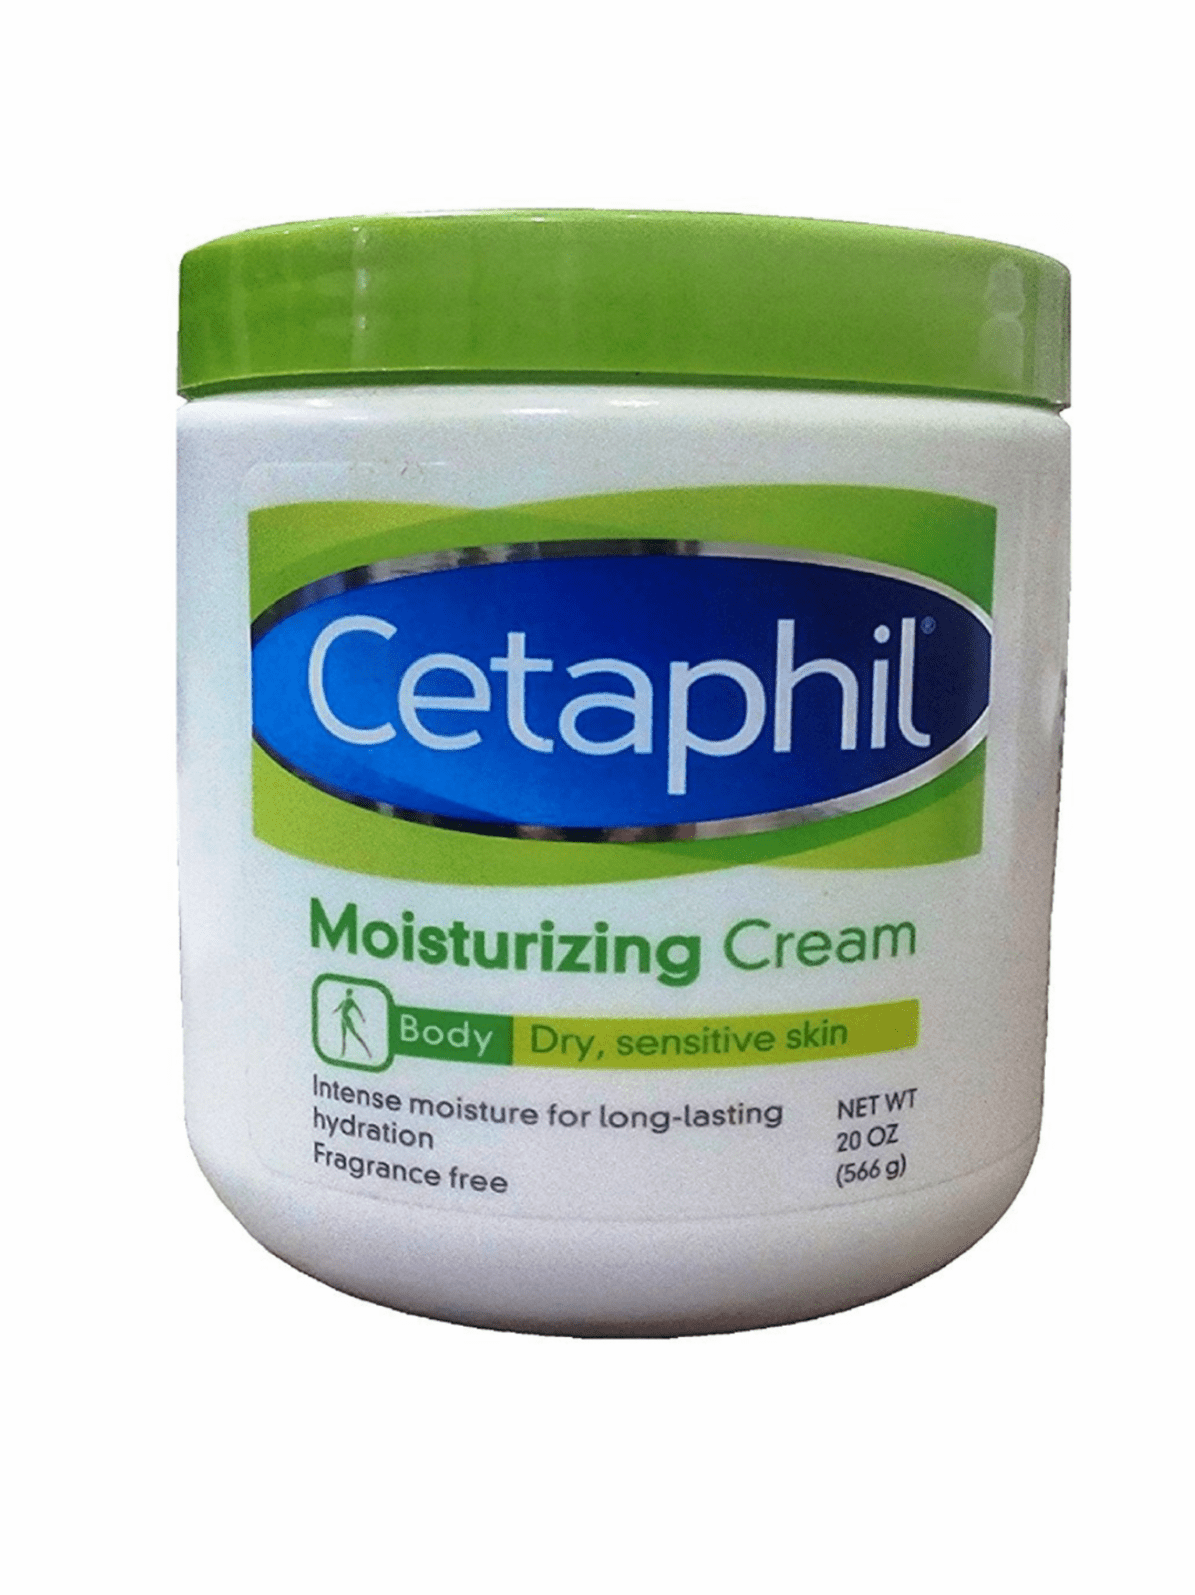 Cetaphil moisturizing Cream for Dry/Sensitive Skin, eczema